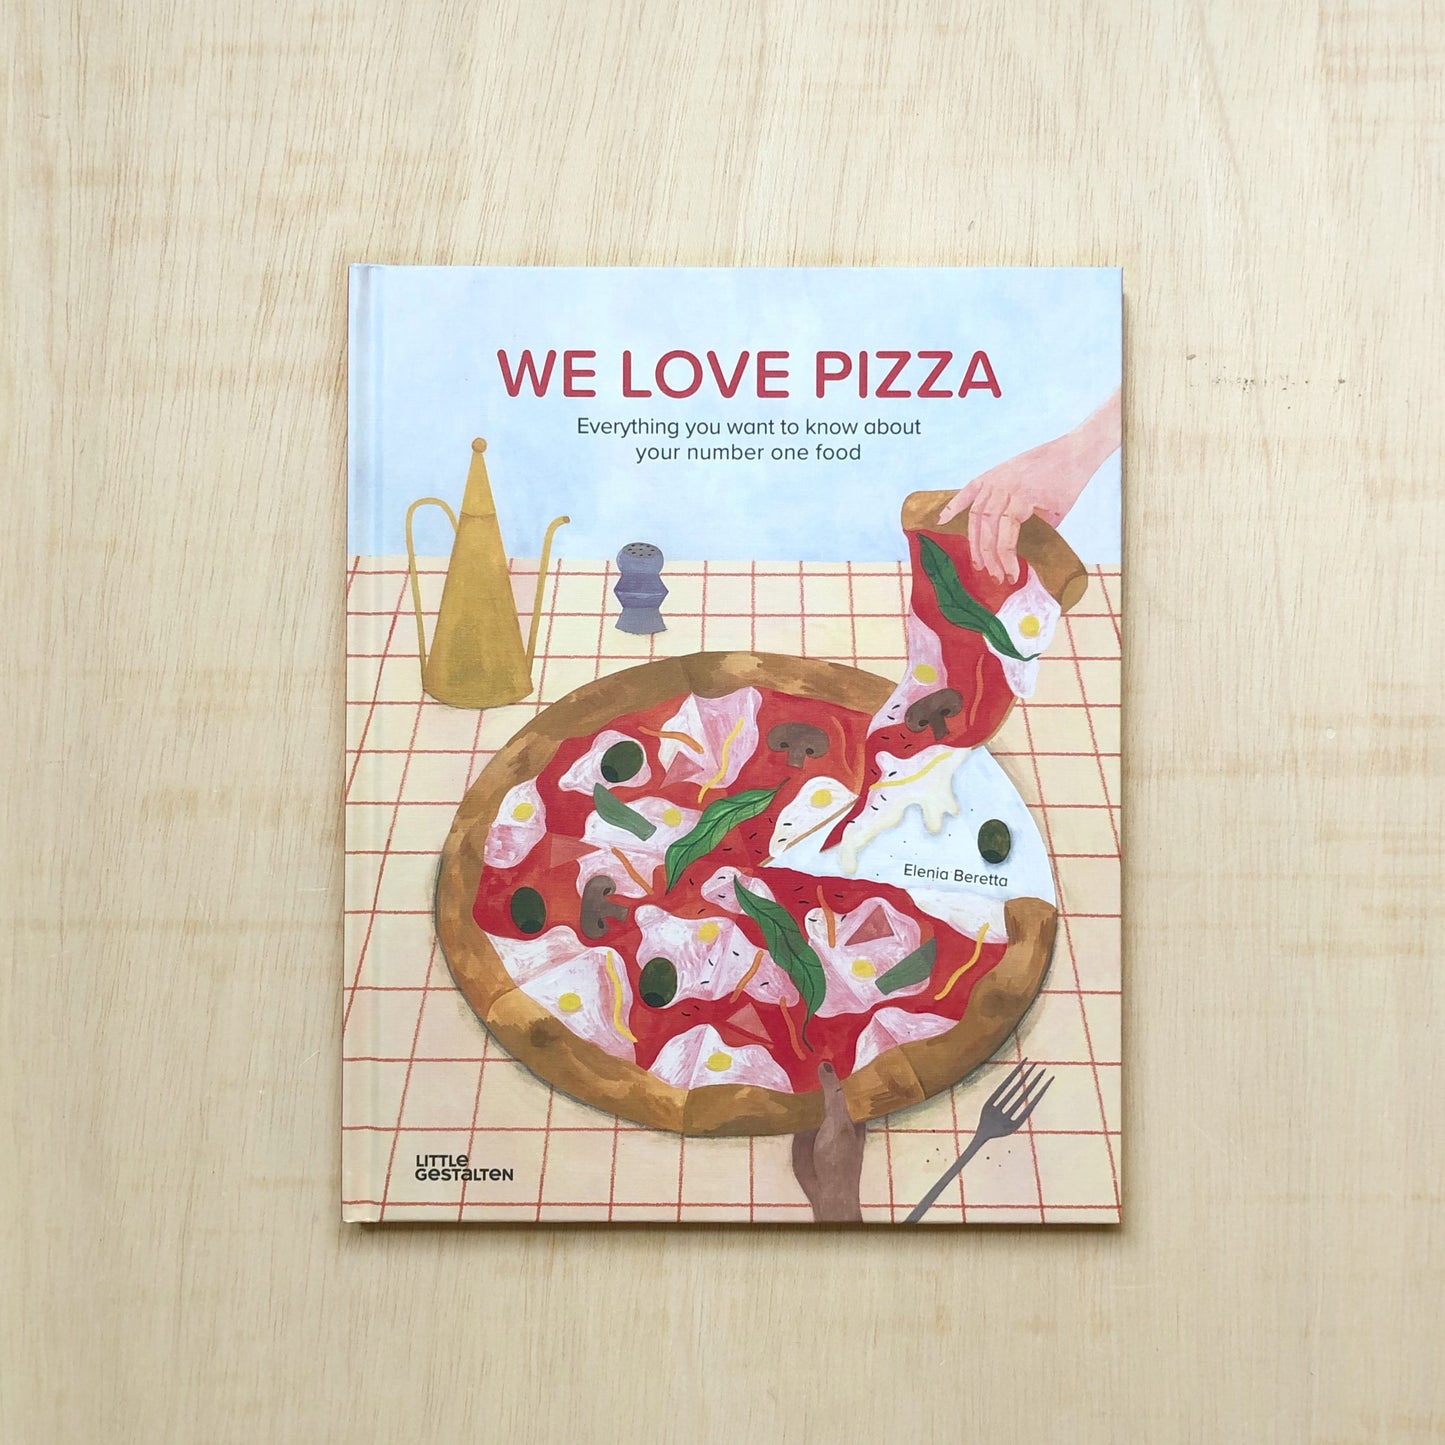 We love Pizza